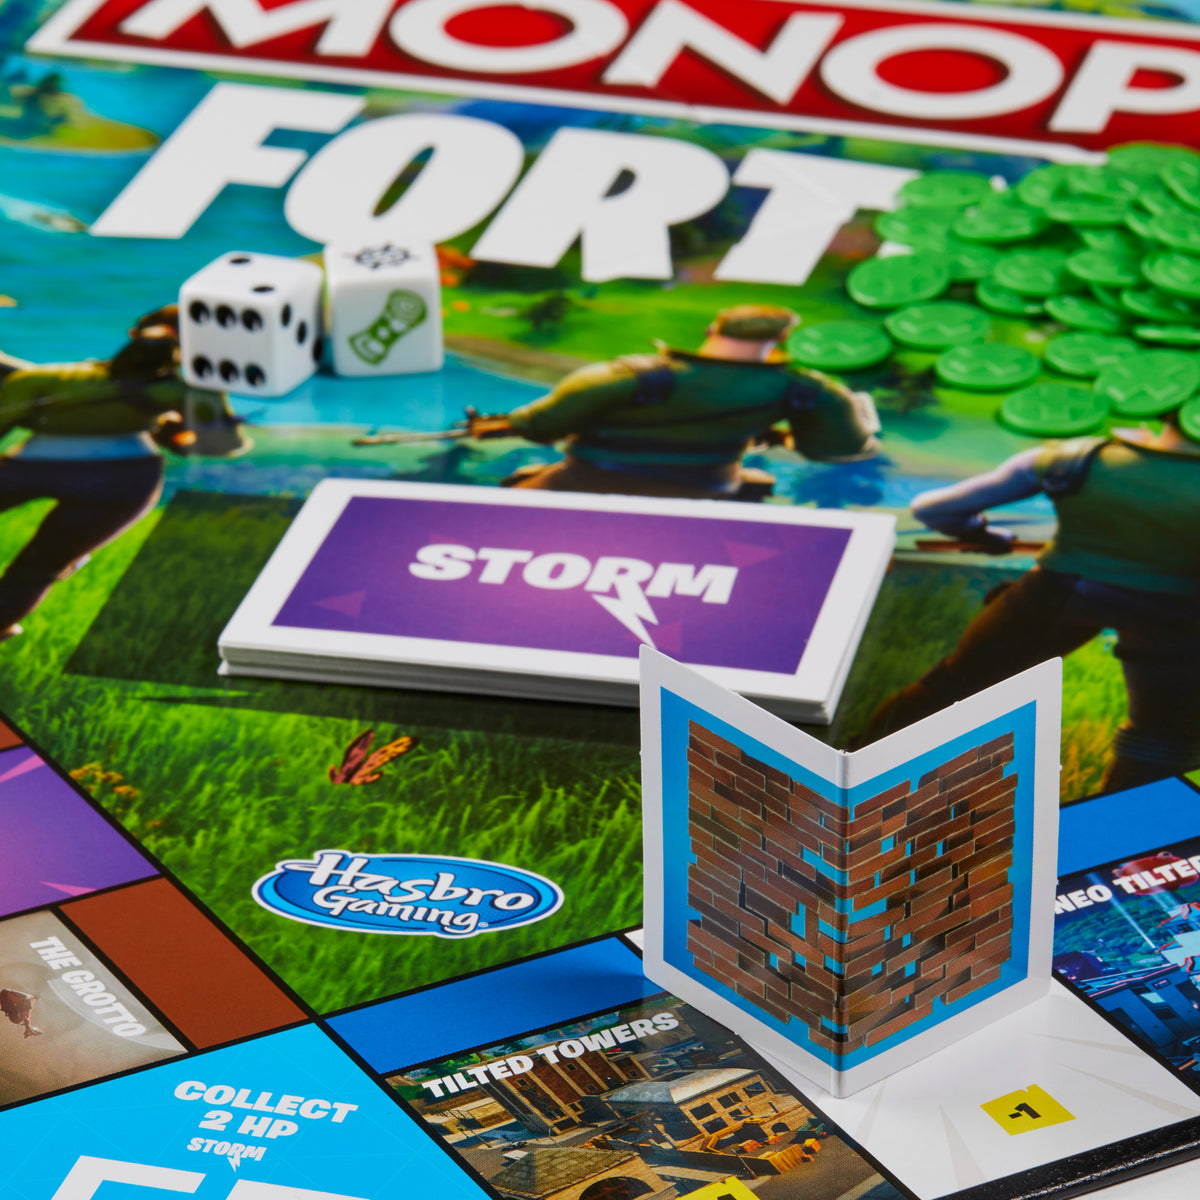 Monopoly: Fortnite Collector's Edition – Hasbro Pulse